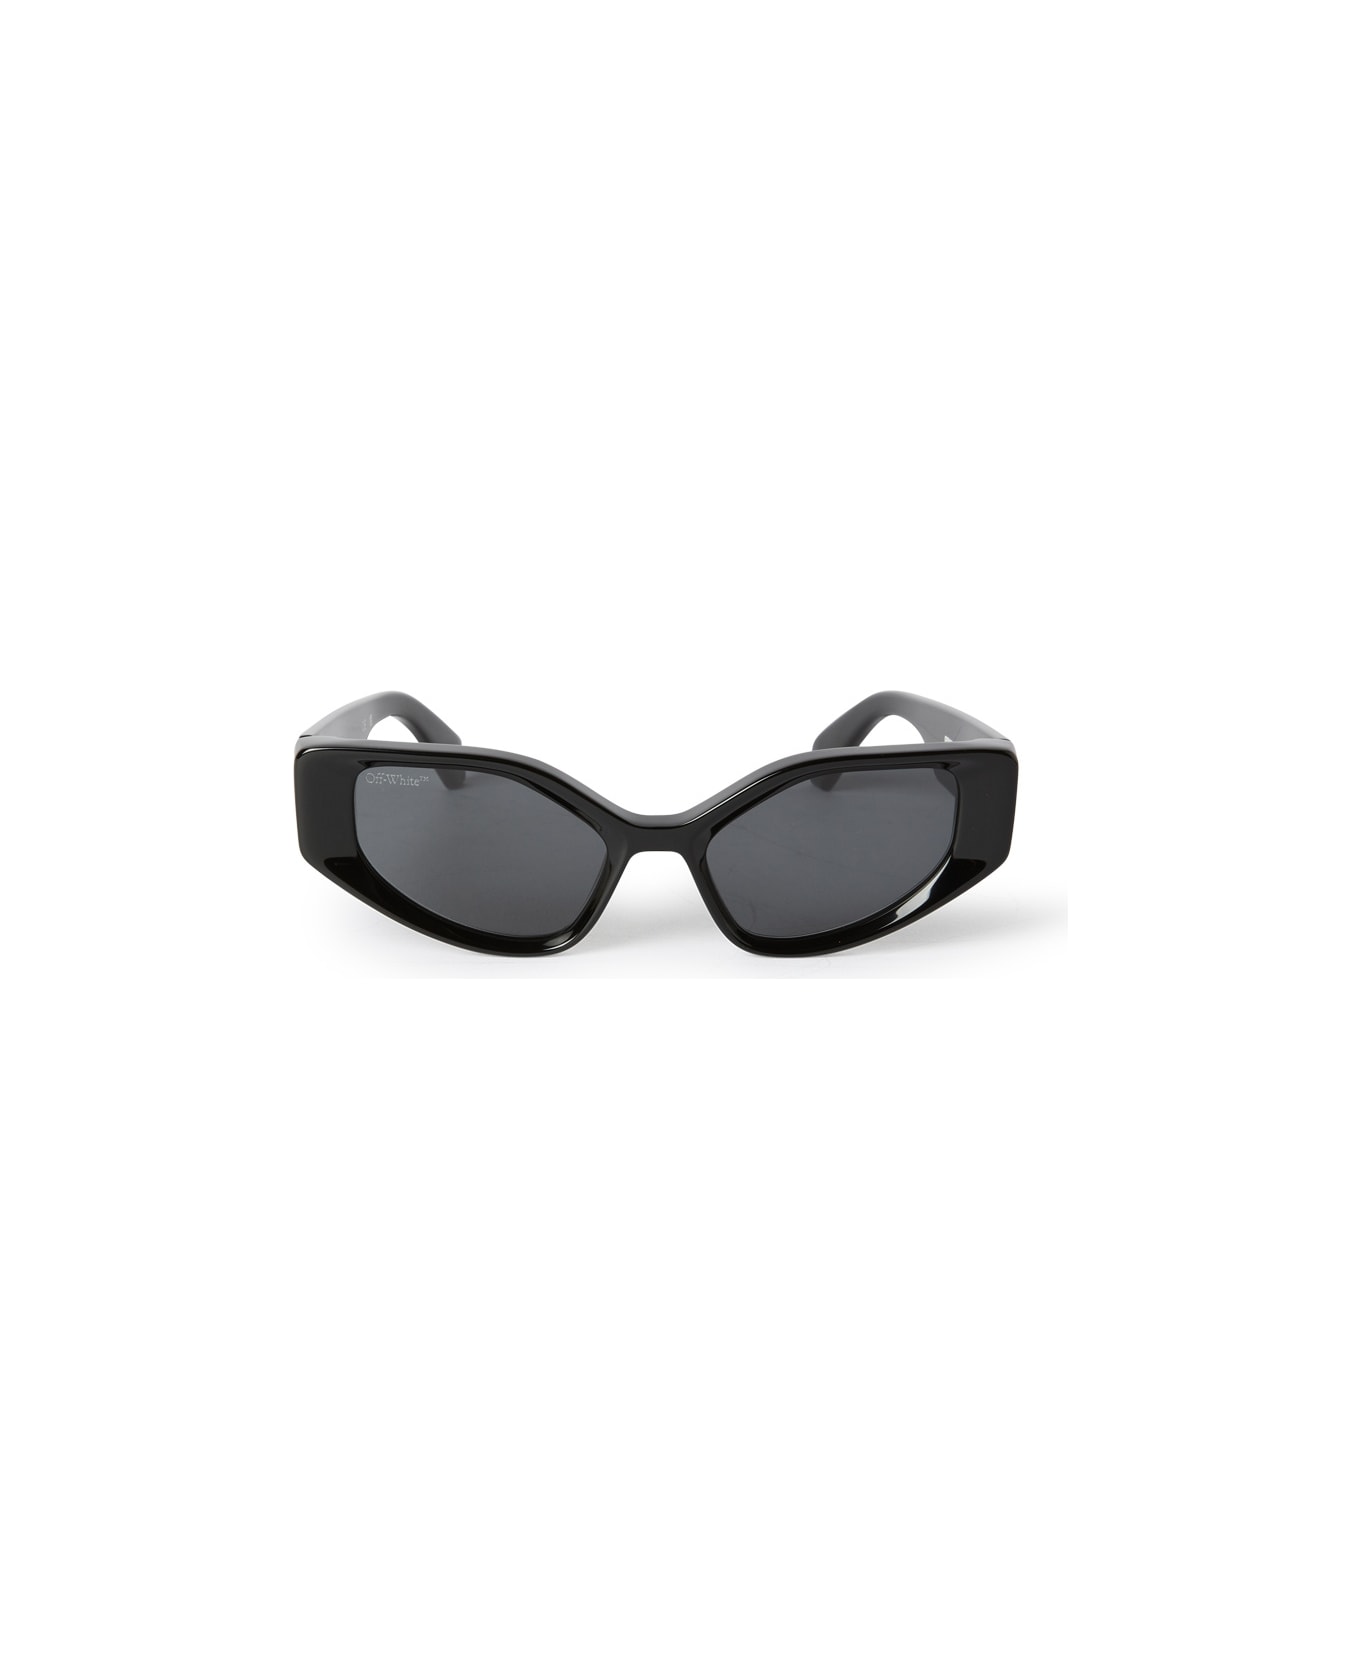 Off-White MEMPHIS SUNGLASSES Sunglasses - Black